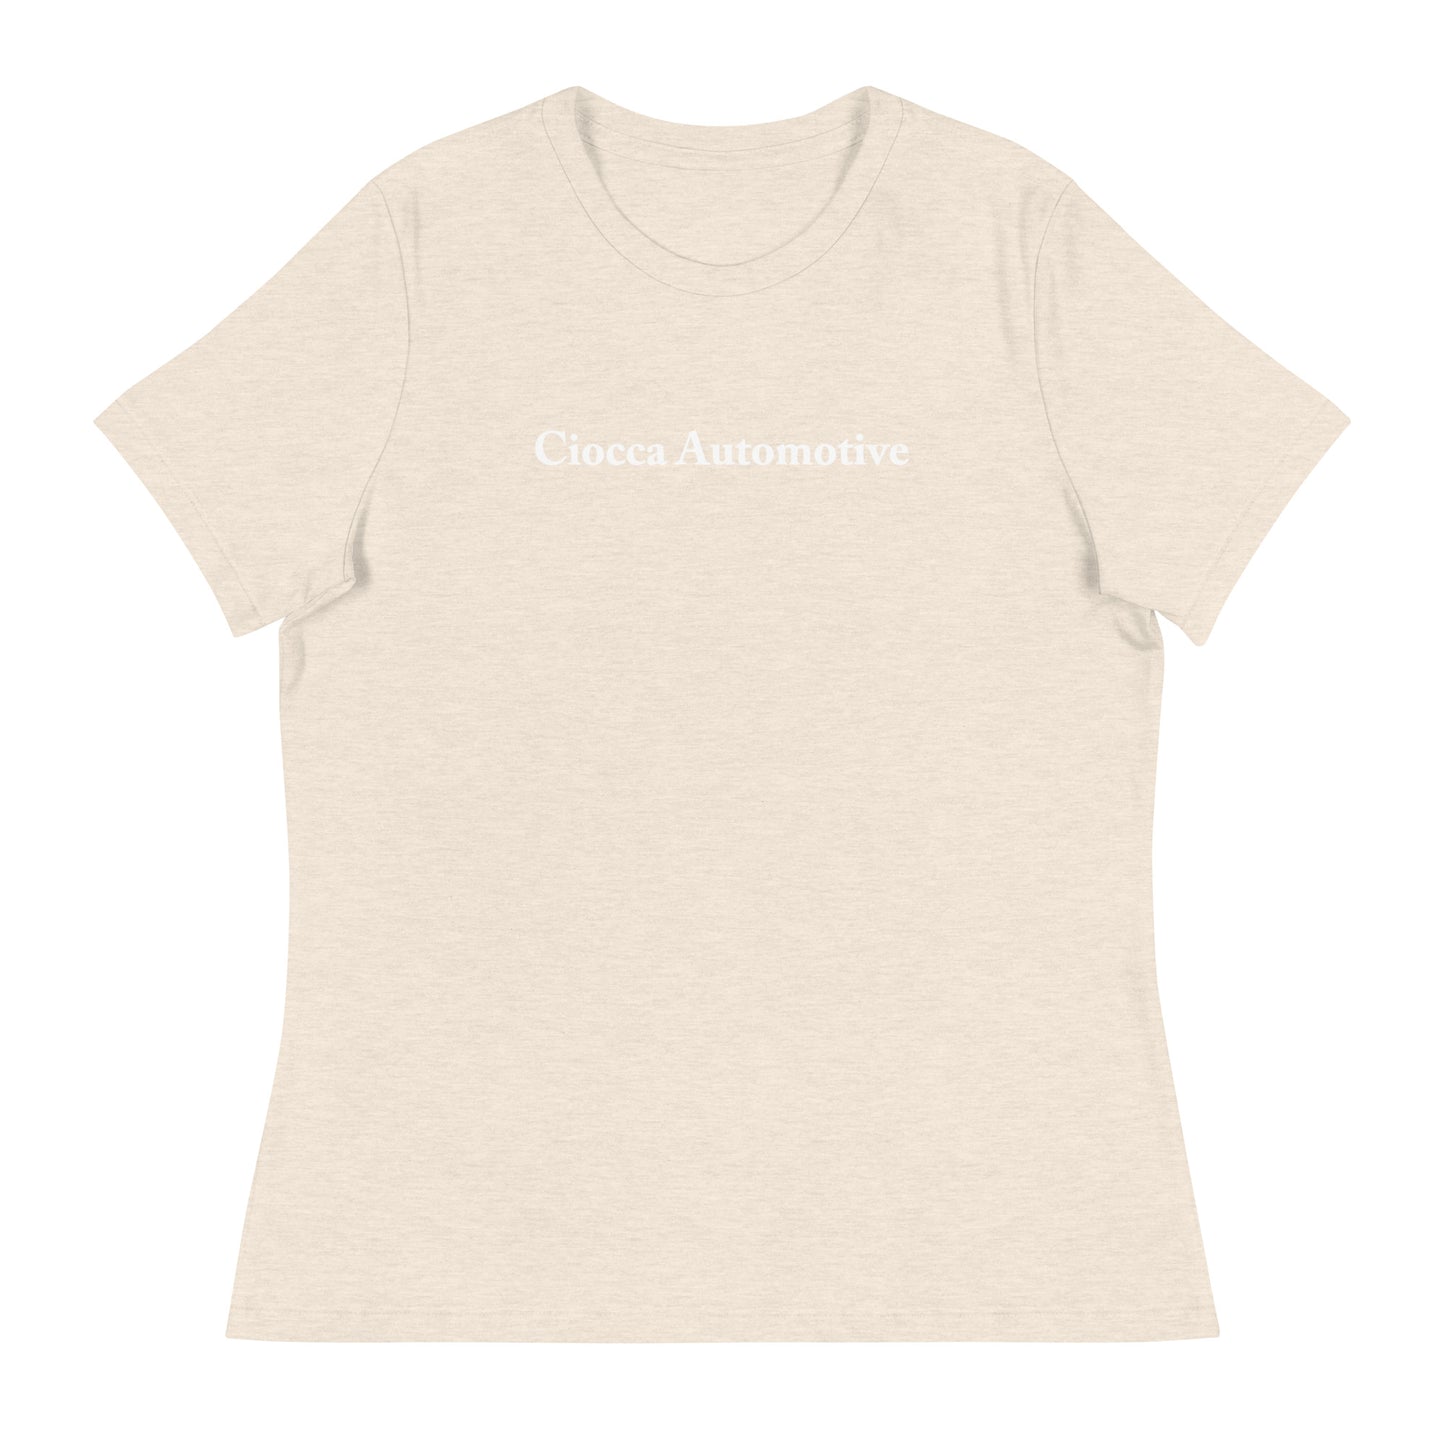 Women's Classic T-Shirt - Ciocca